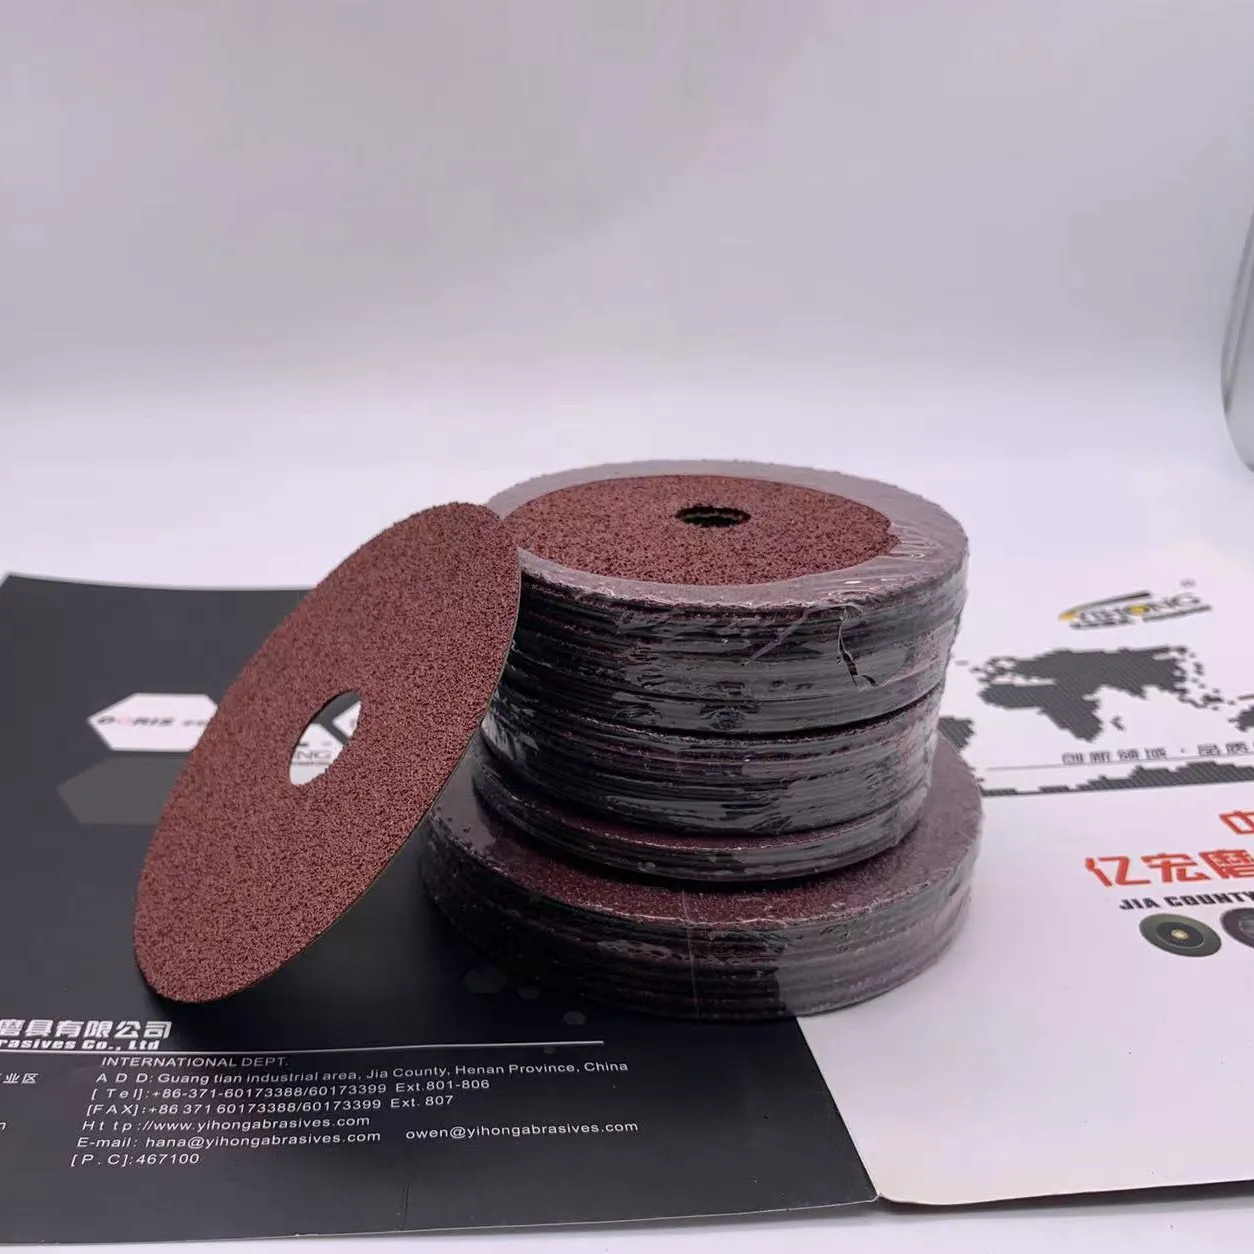 YIHONG 5 Inch Aluminum Oxide Resin Fiber Sanding Disc Grinding Disc for Metal Stainless Steel Polishing Grinding